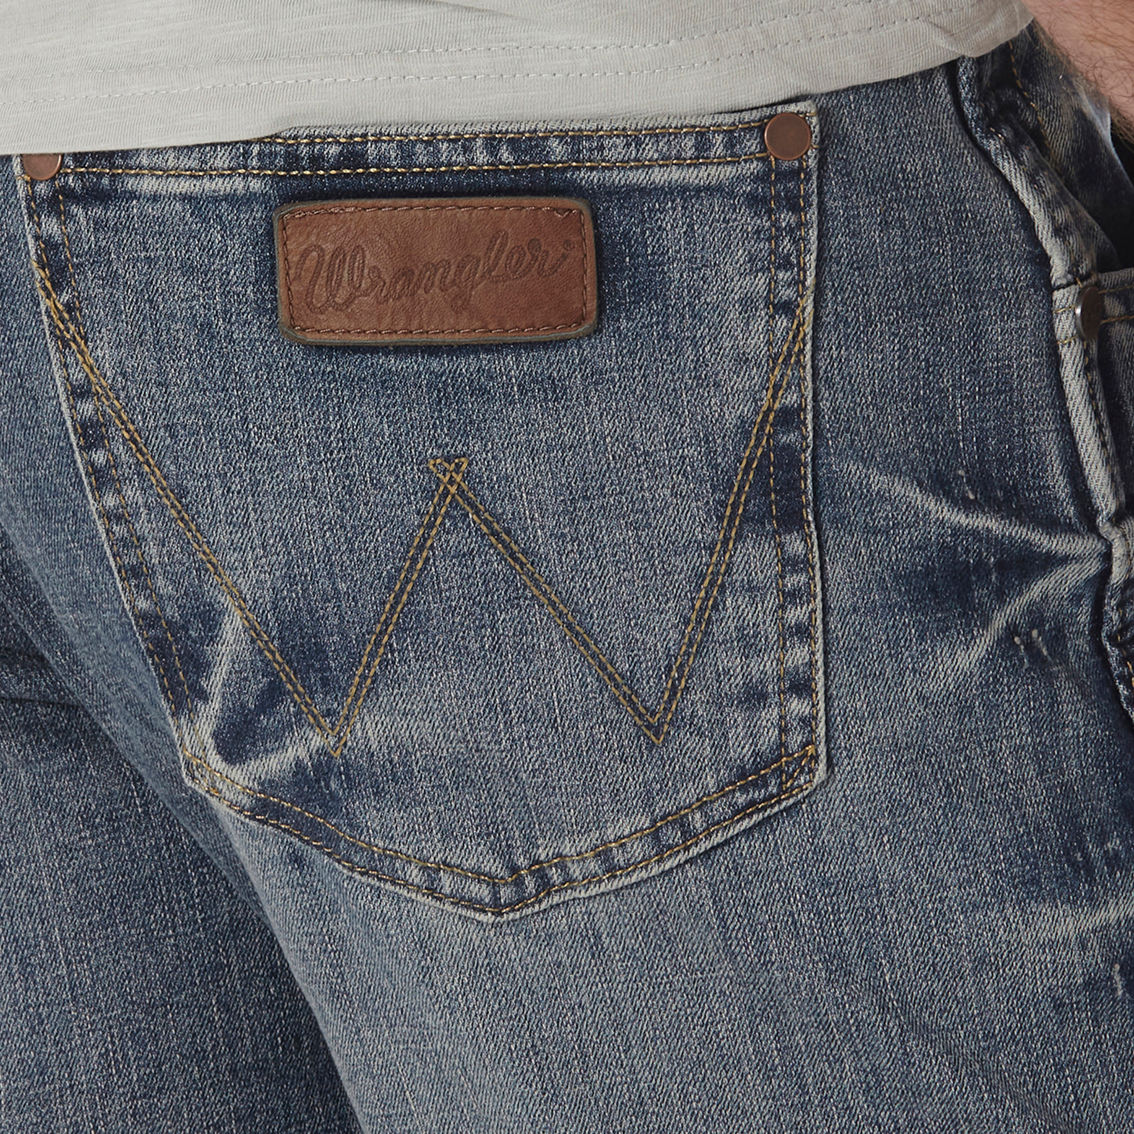 Wrangler Greeley Retro Slim Bootcut Jeans - Image 3 of 3